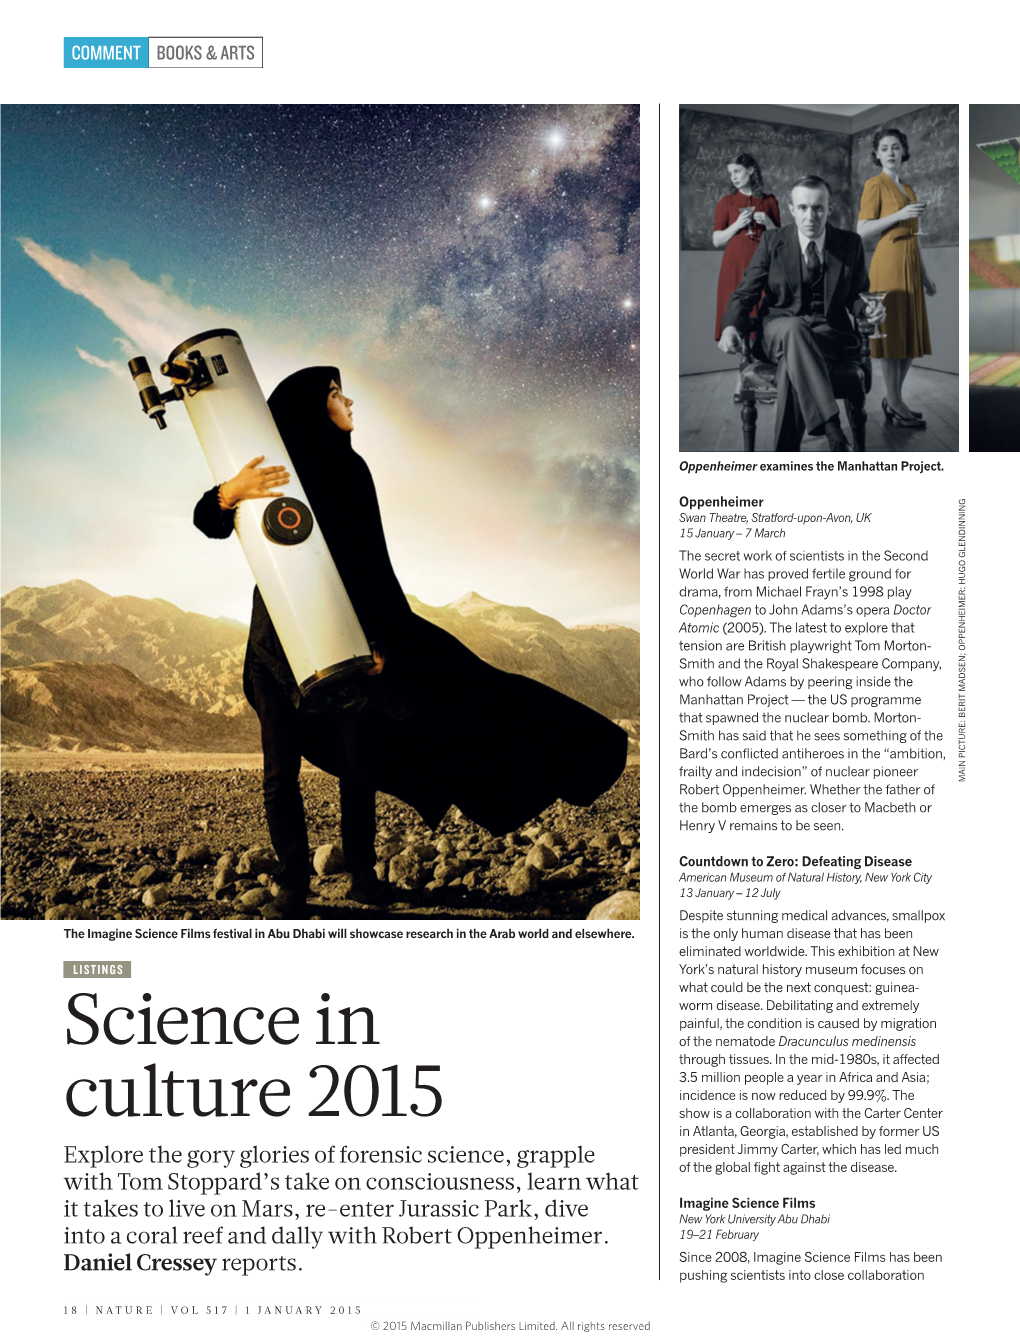 Science in Culture 2015